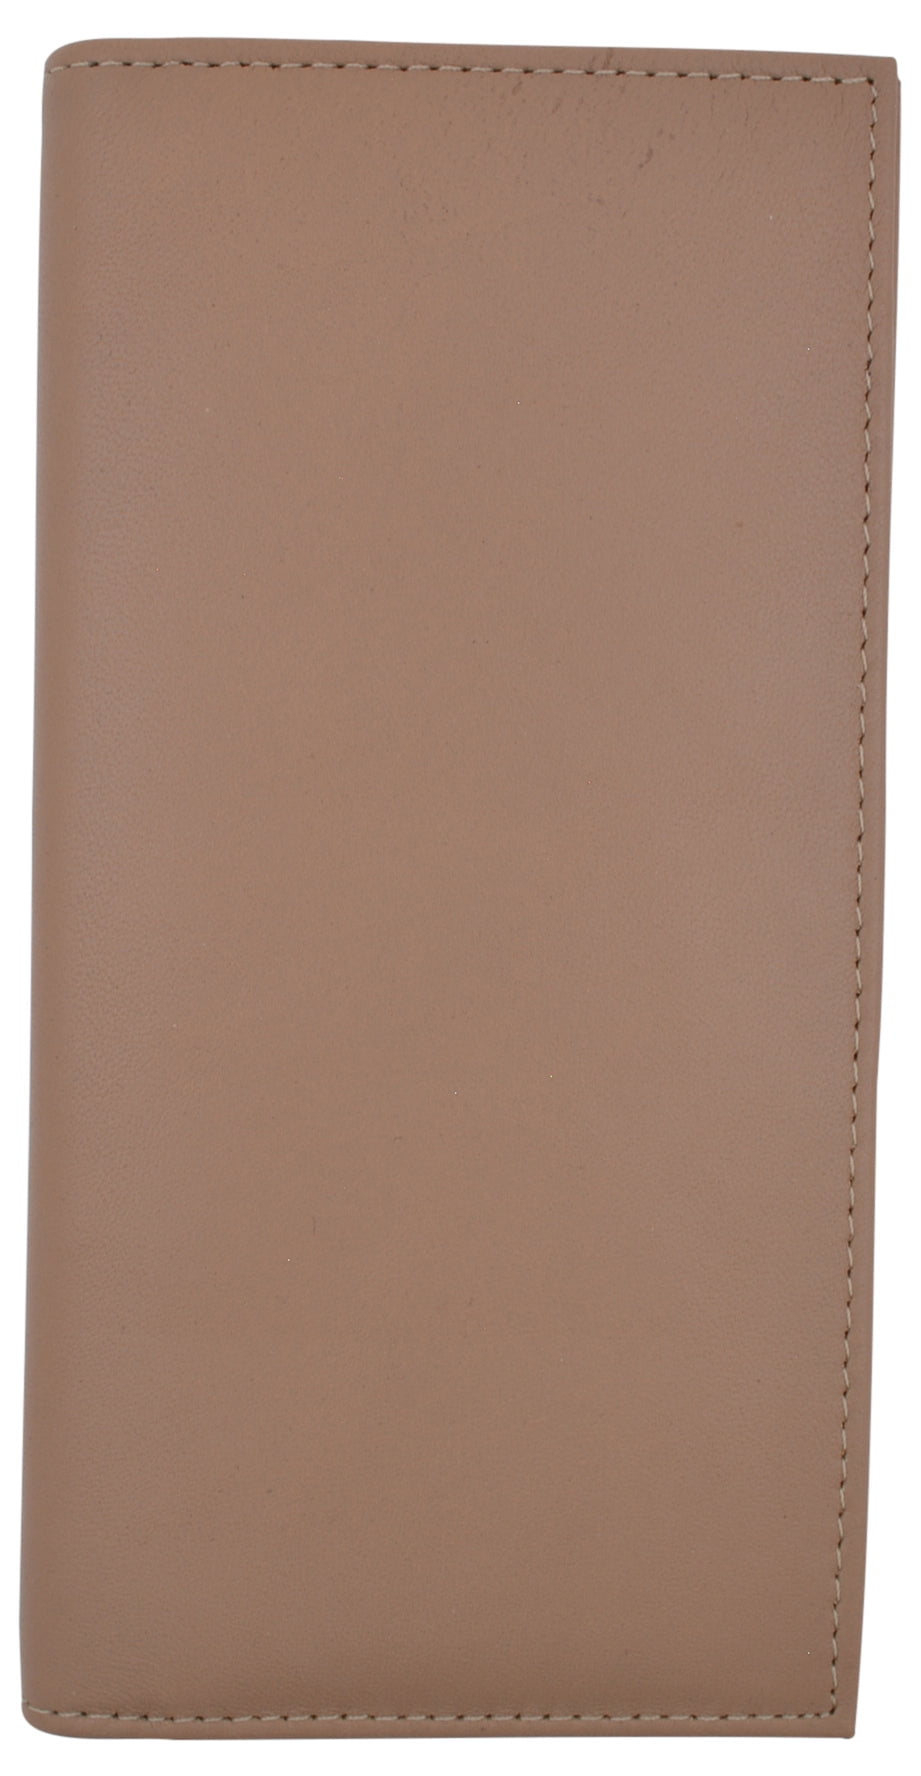 Basic Leather Checkbook Cover - Walmart.com